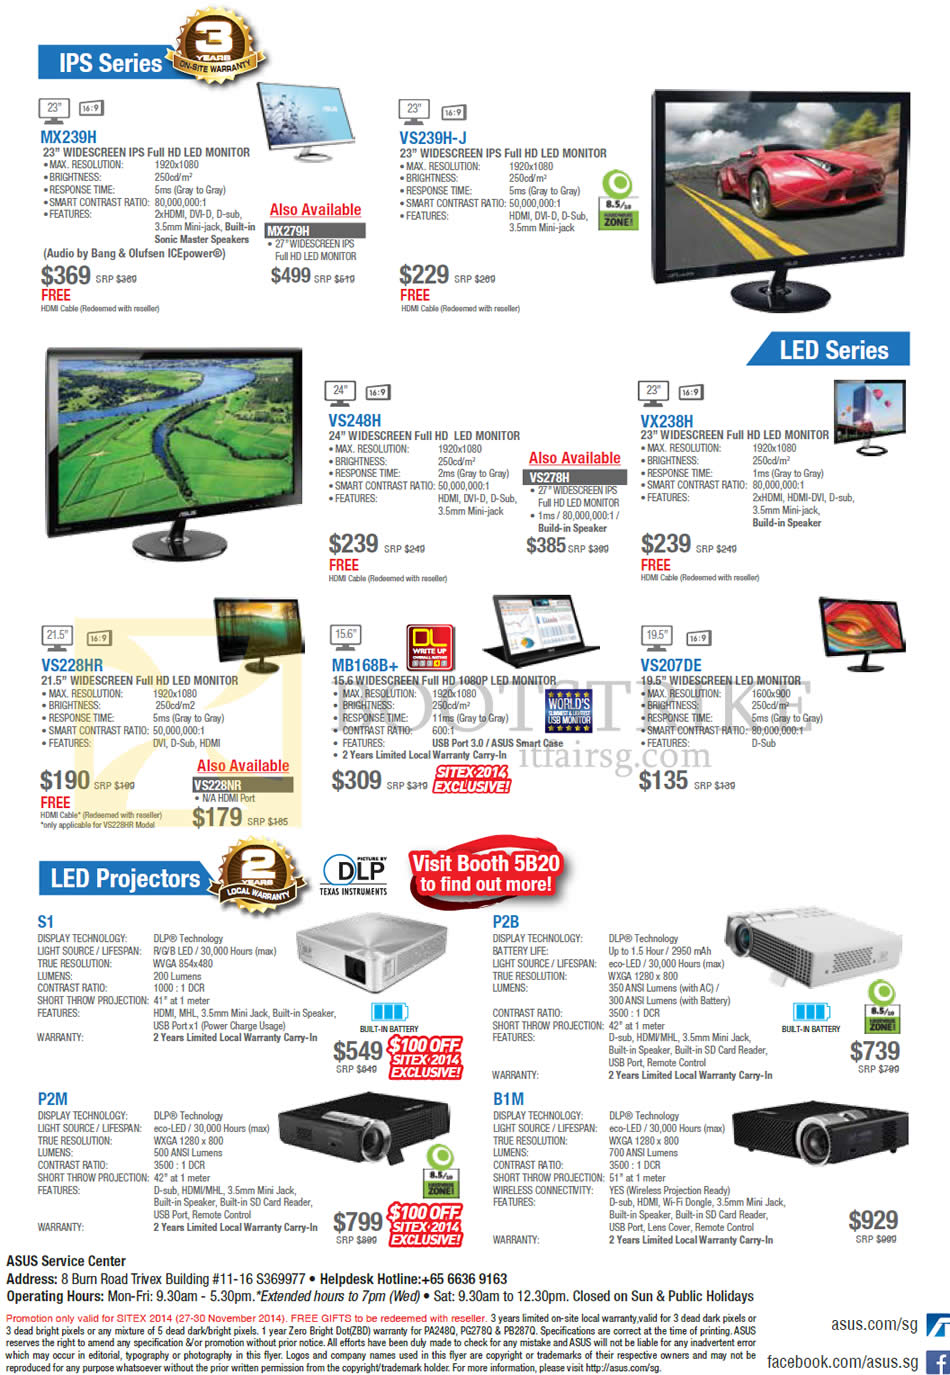 SITEX 2014 price list image brochure of ASUS Monitors, Projectors, MX239H, MX279H, VS239H-J, VS248H, VX238H, VS278H, VS228HR, MB168B Plus, VS207DE, S1, P2B, P2M, B1M